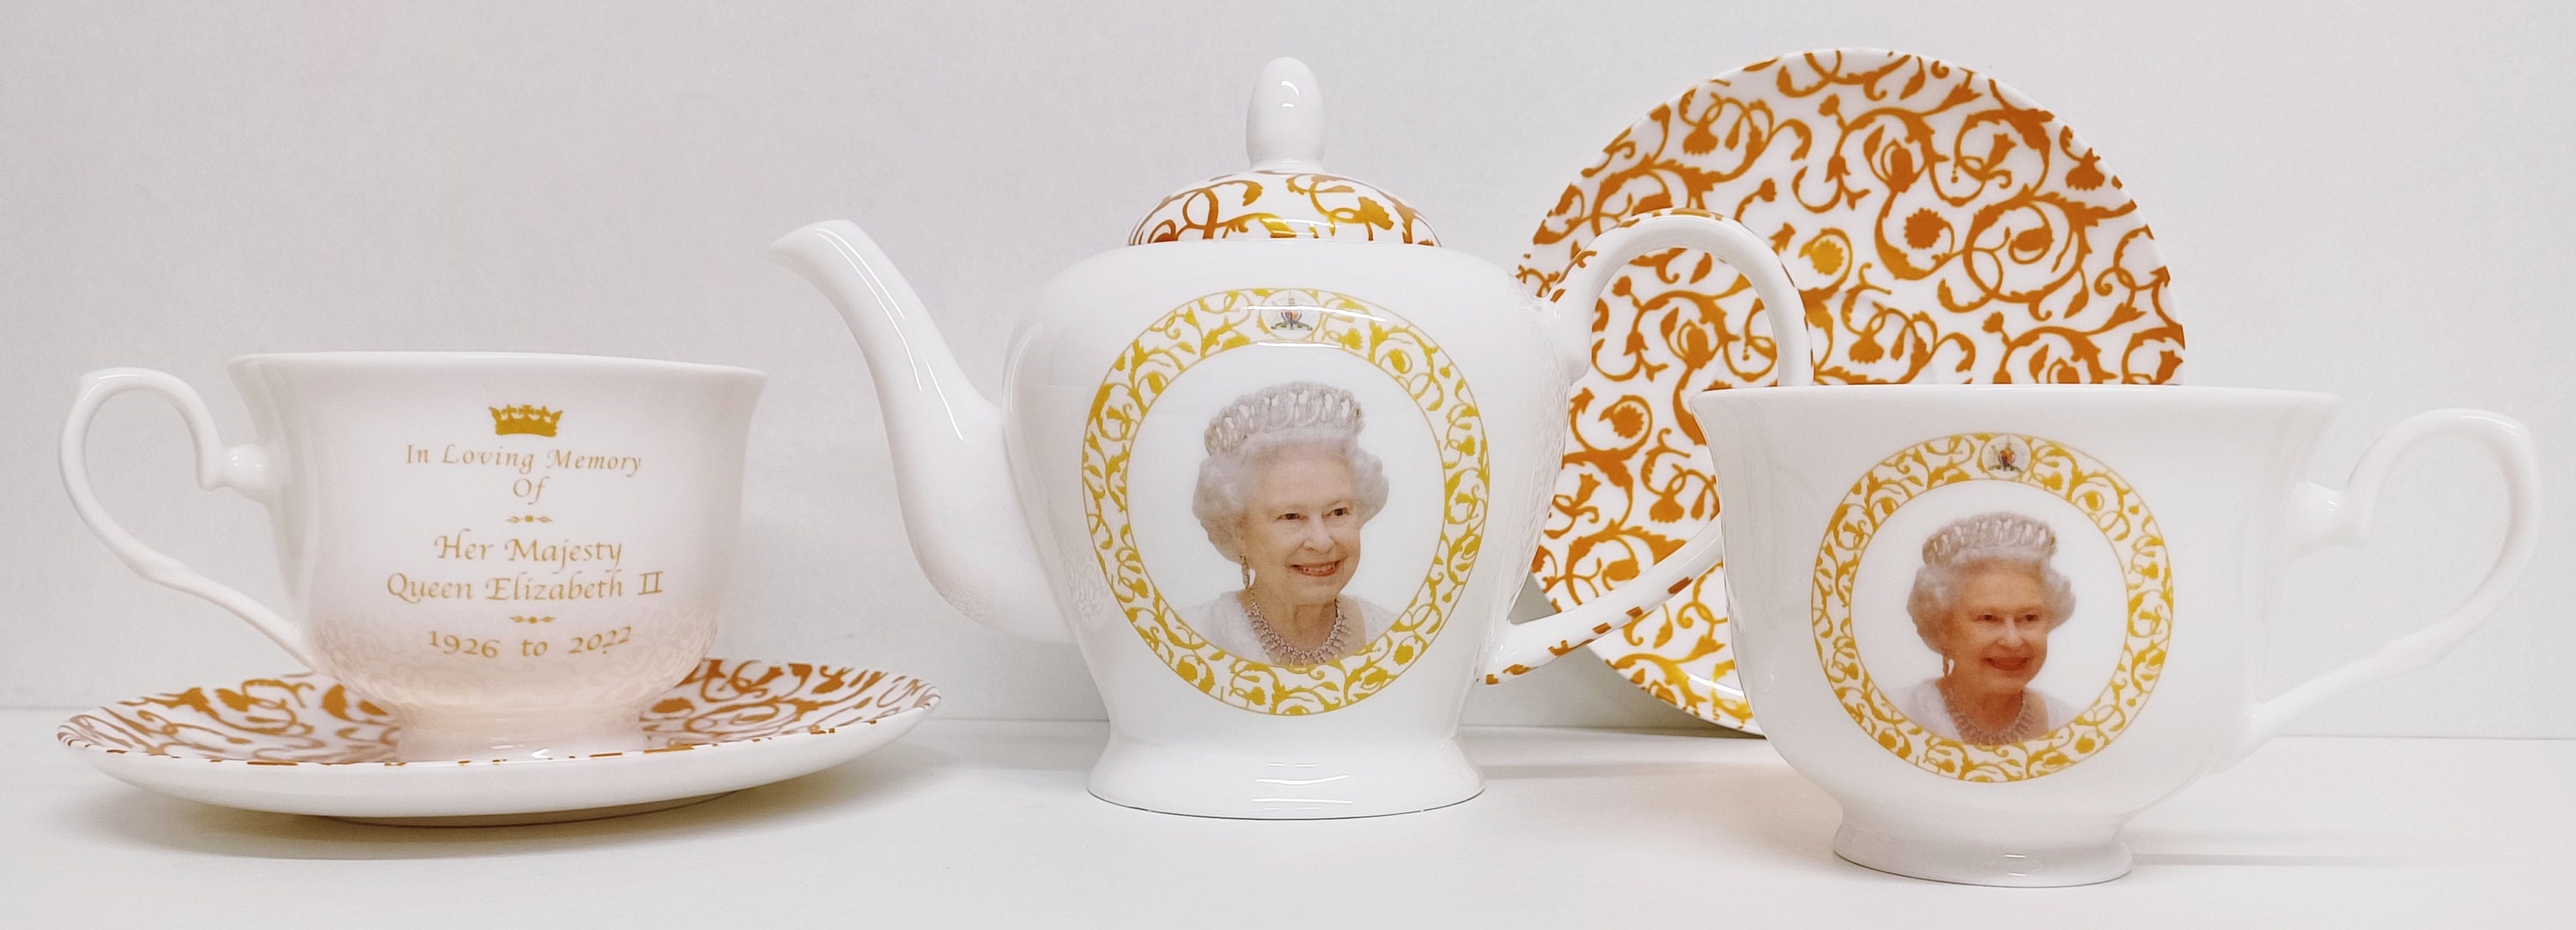 In Loving Memory HM Queen Elizabeth II 1926-2022 Tea Set Fine Bone China  Small Teapot 2 Cups 2 Saucers Hand Decorated UK -  Israel